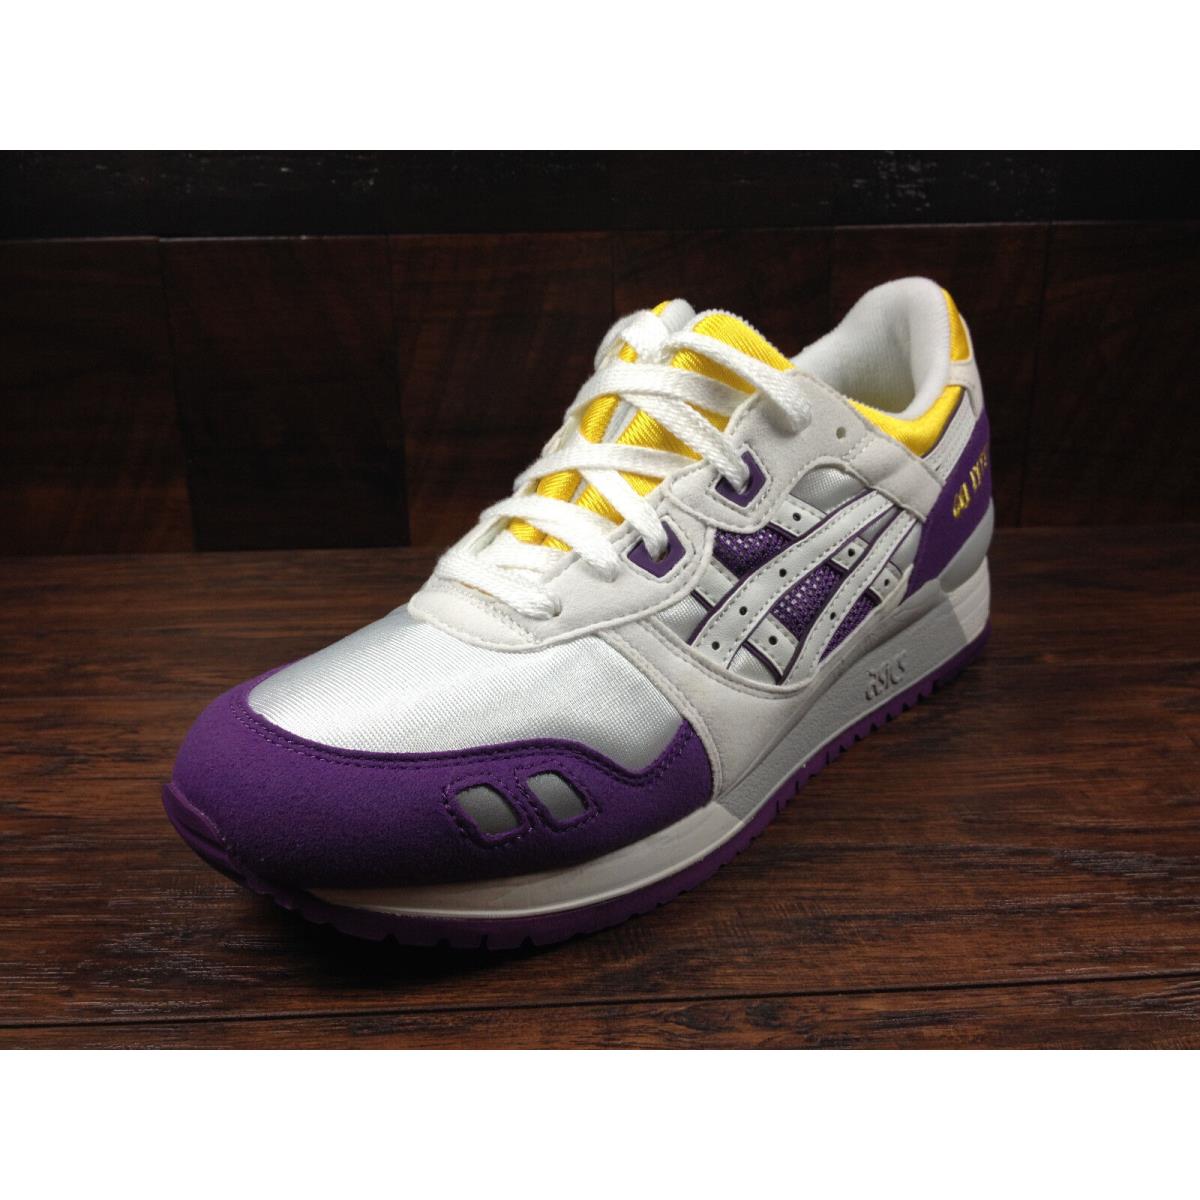 ASICS shoes III - White / Purple / Yellow 0